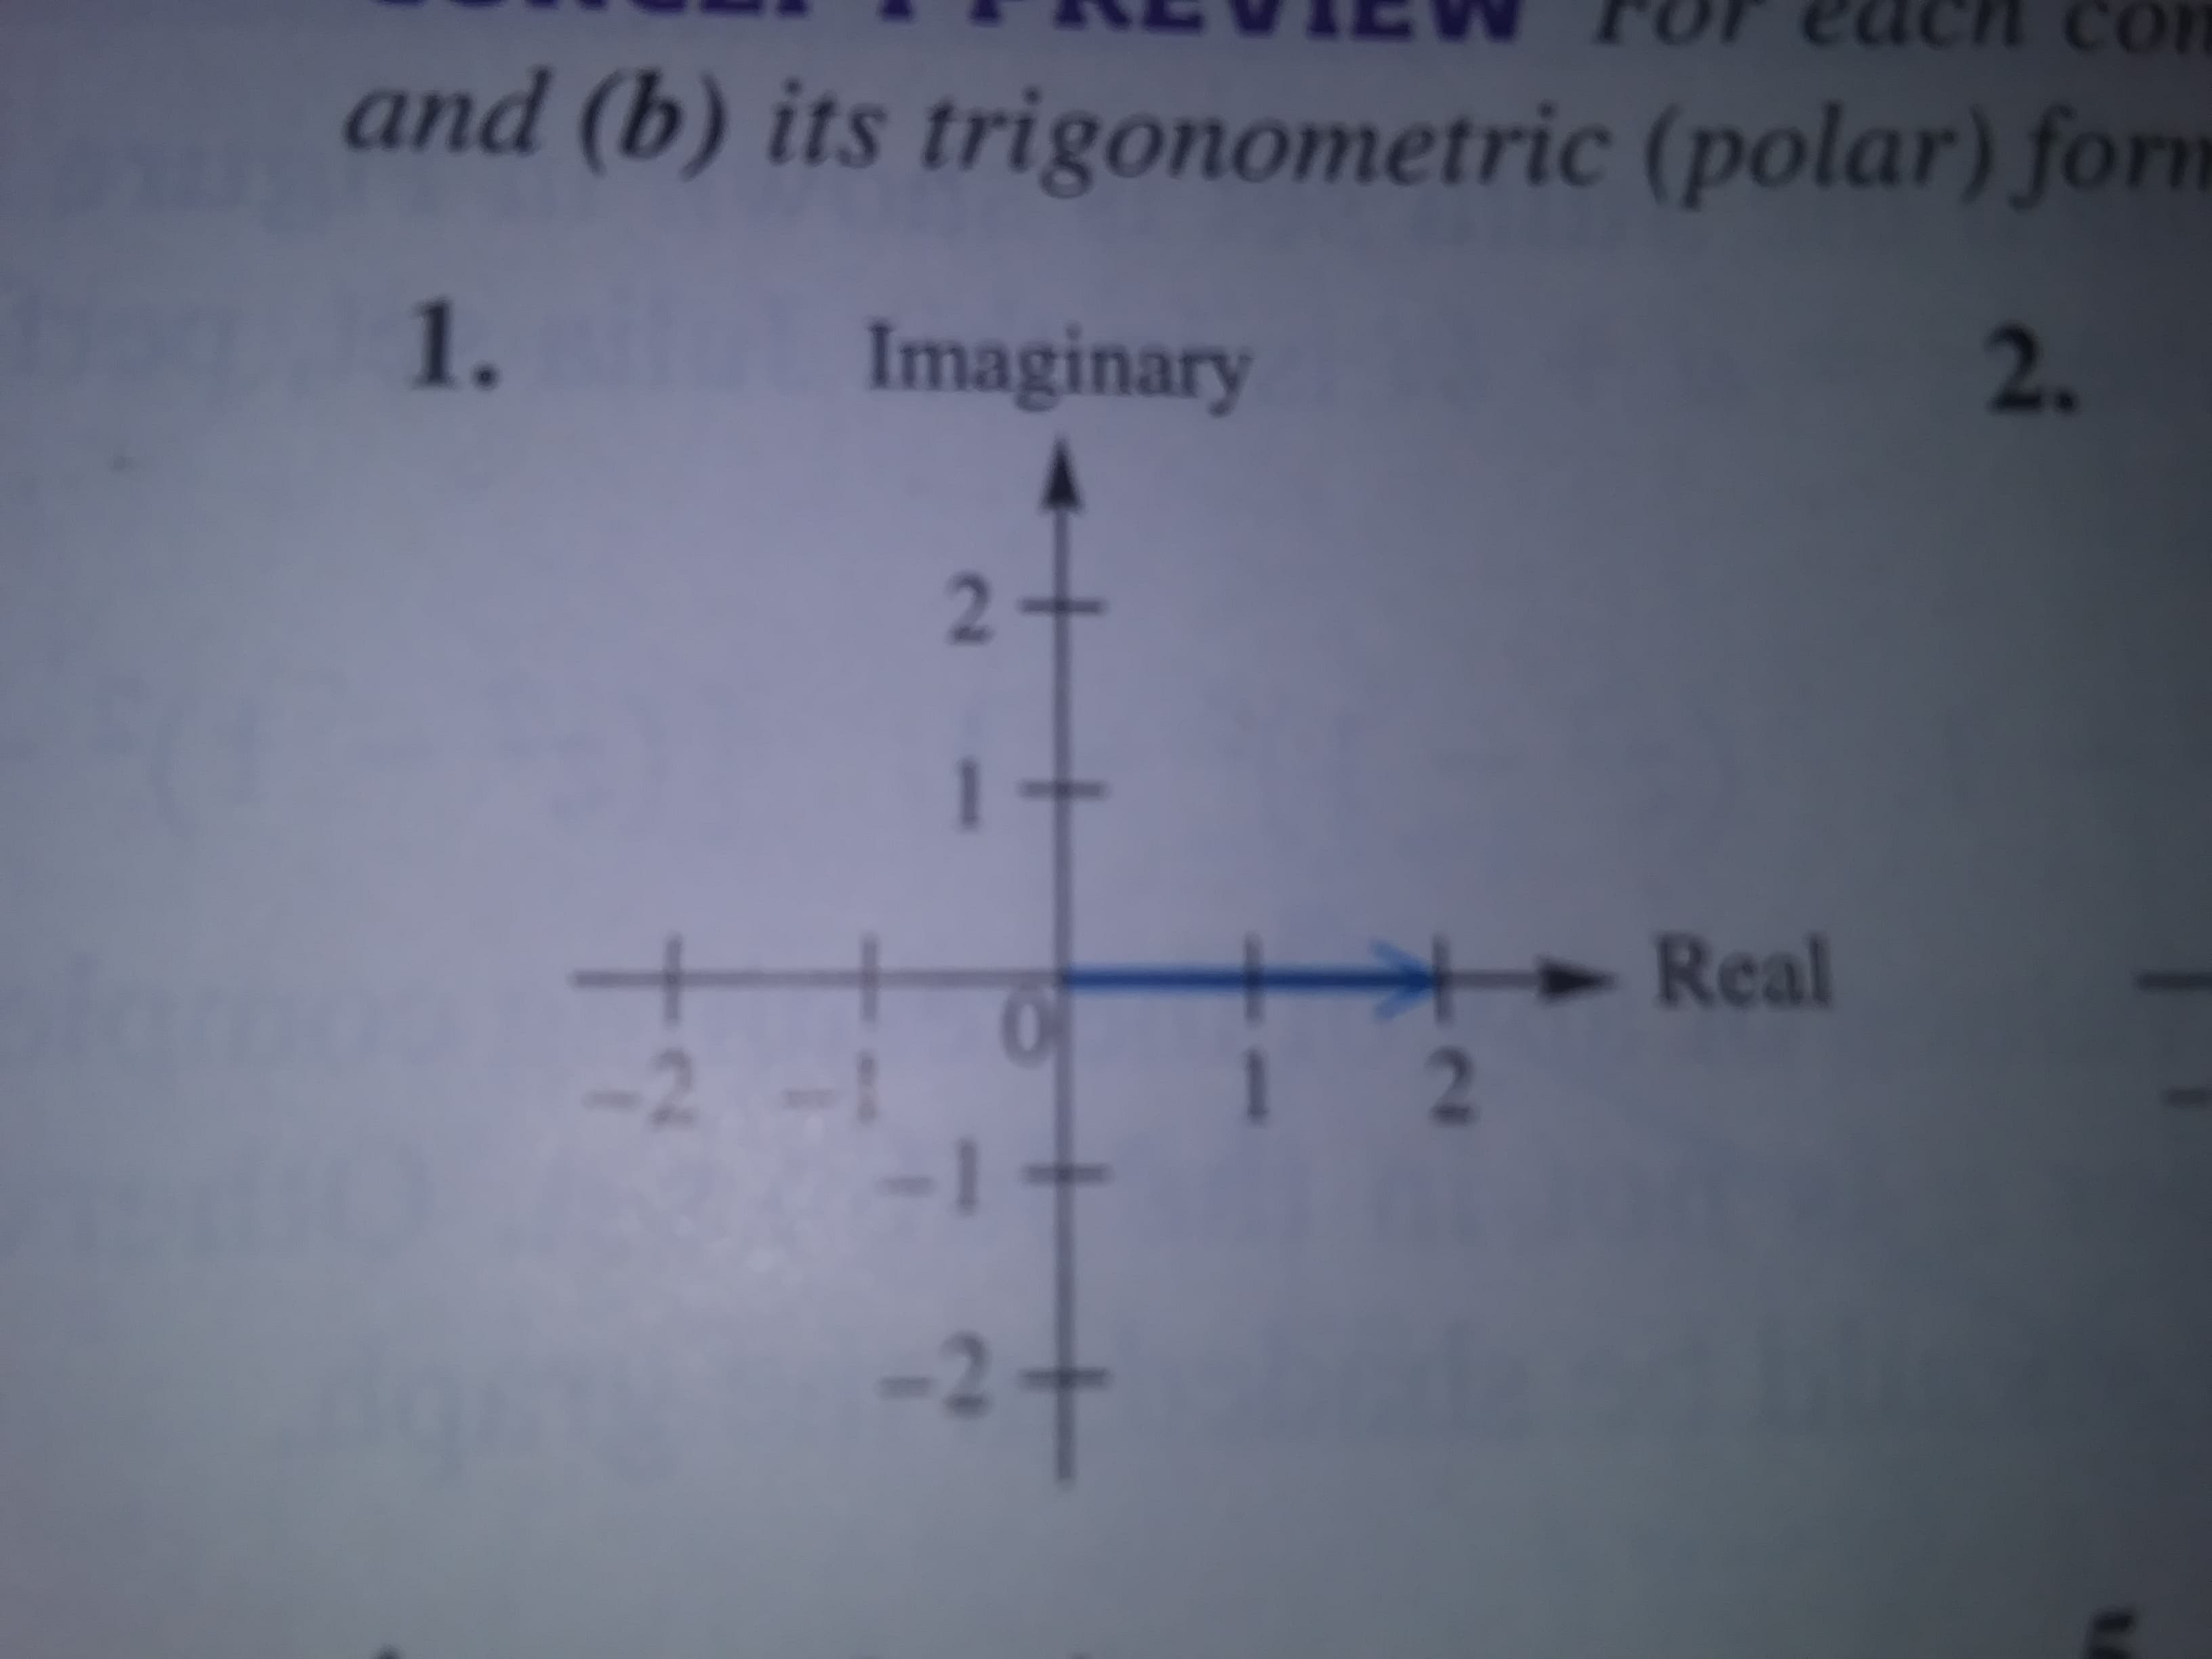 Co
10.
and (b) its trigonometric (polar) form
1.
Imaginary
2.
Real
-2-
12
2.
2.
